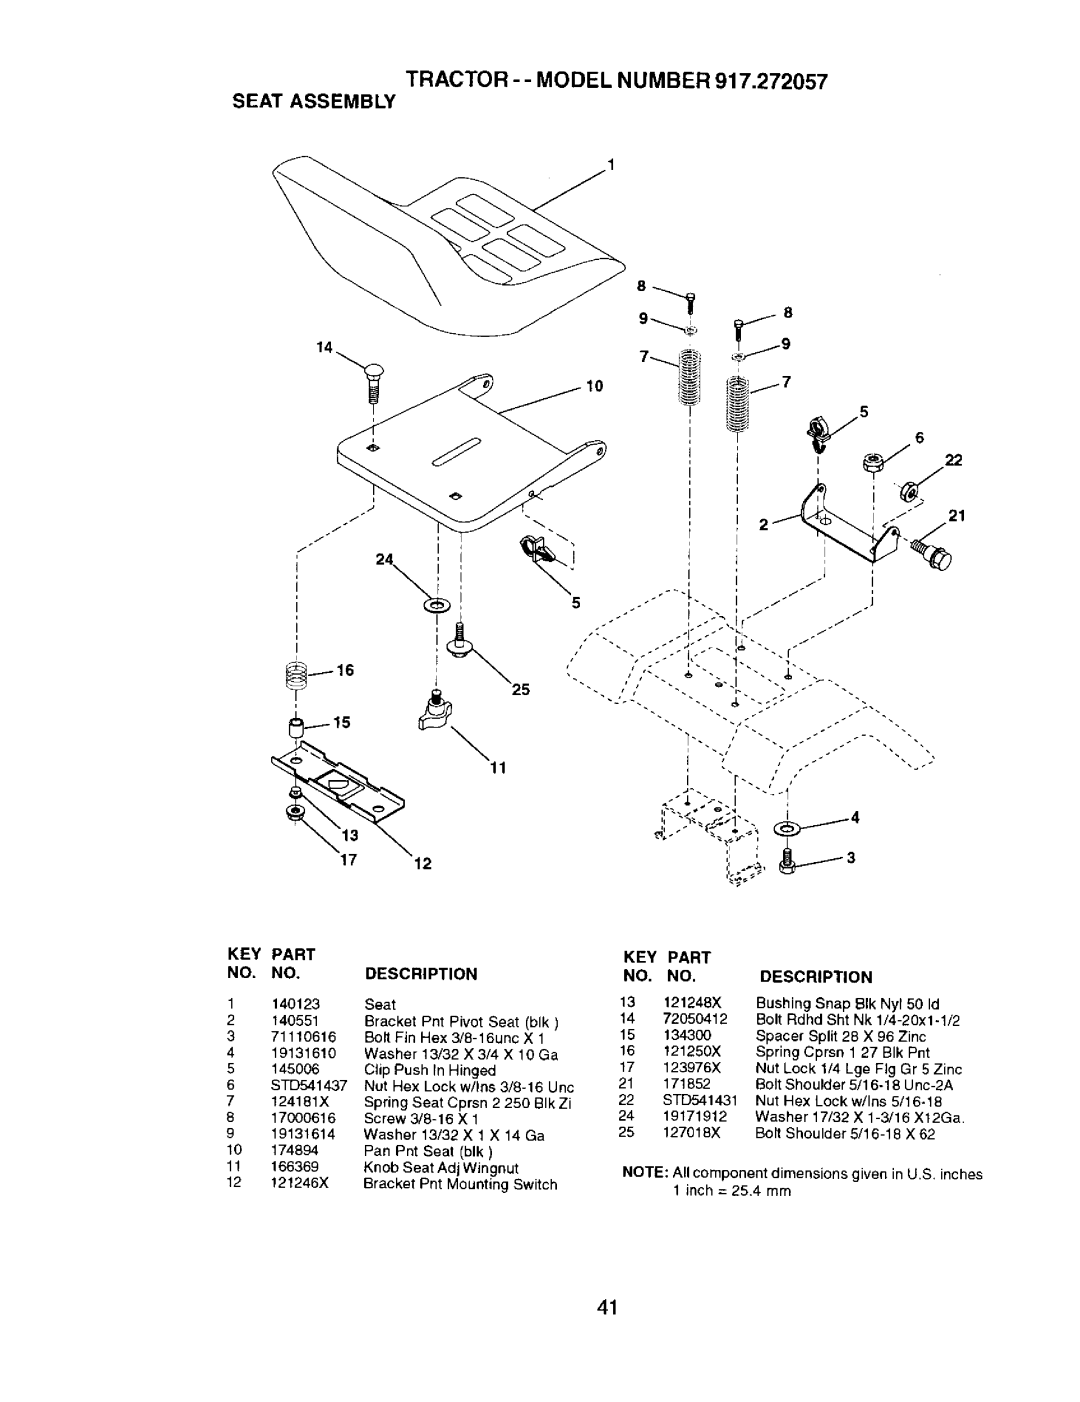 Craftsman 917.272057 owner manual Tractor - - Model Number Seat Assembly, Key Part, Description 